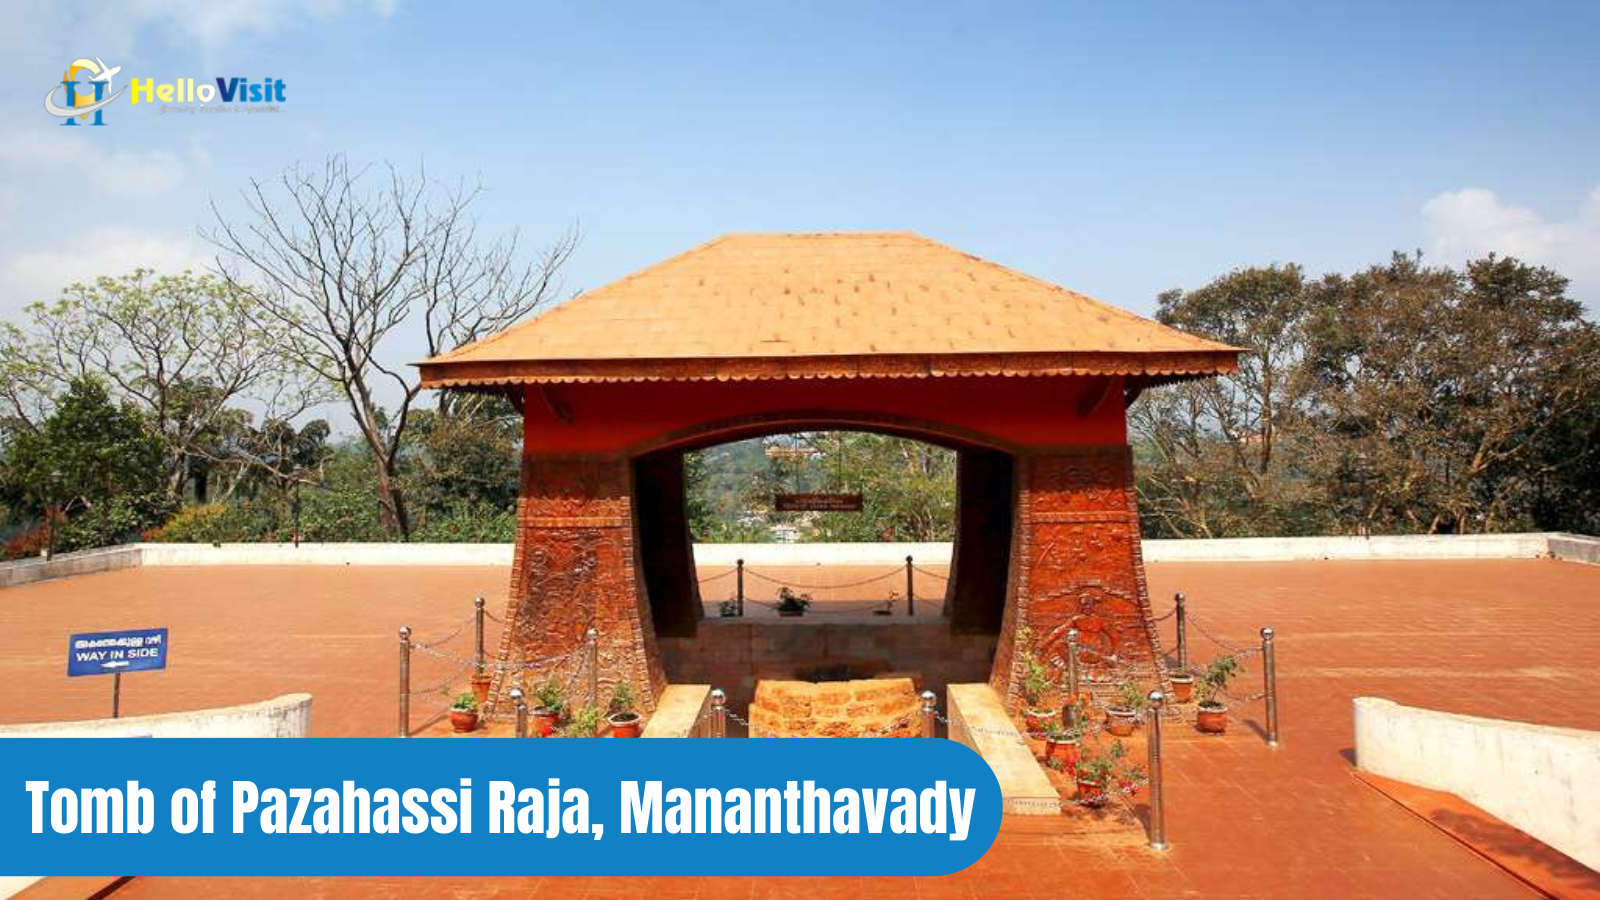 Tomb of Pazahassi Raja, Mananthavady